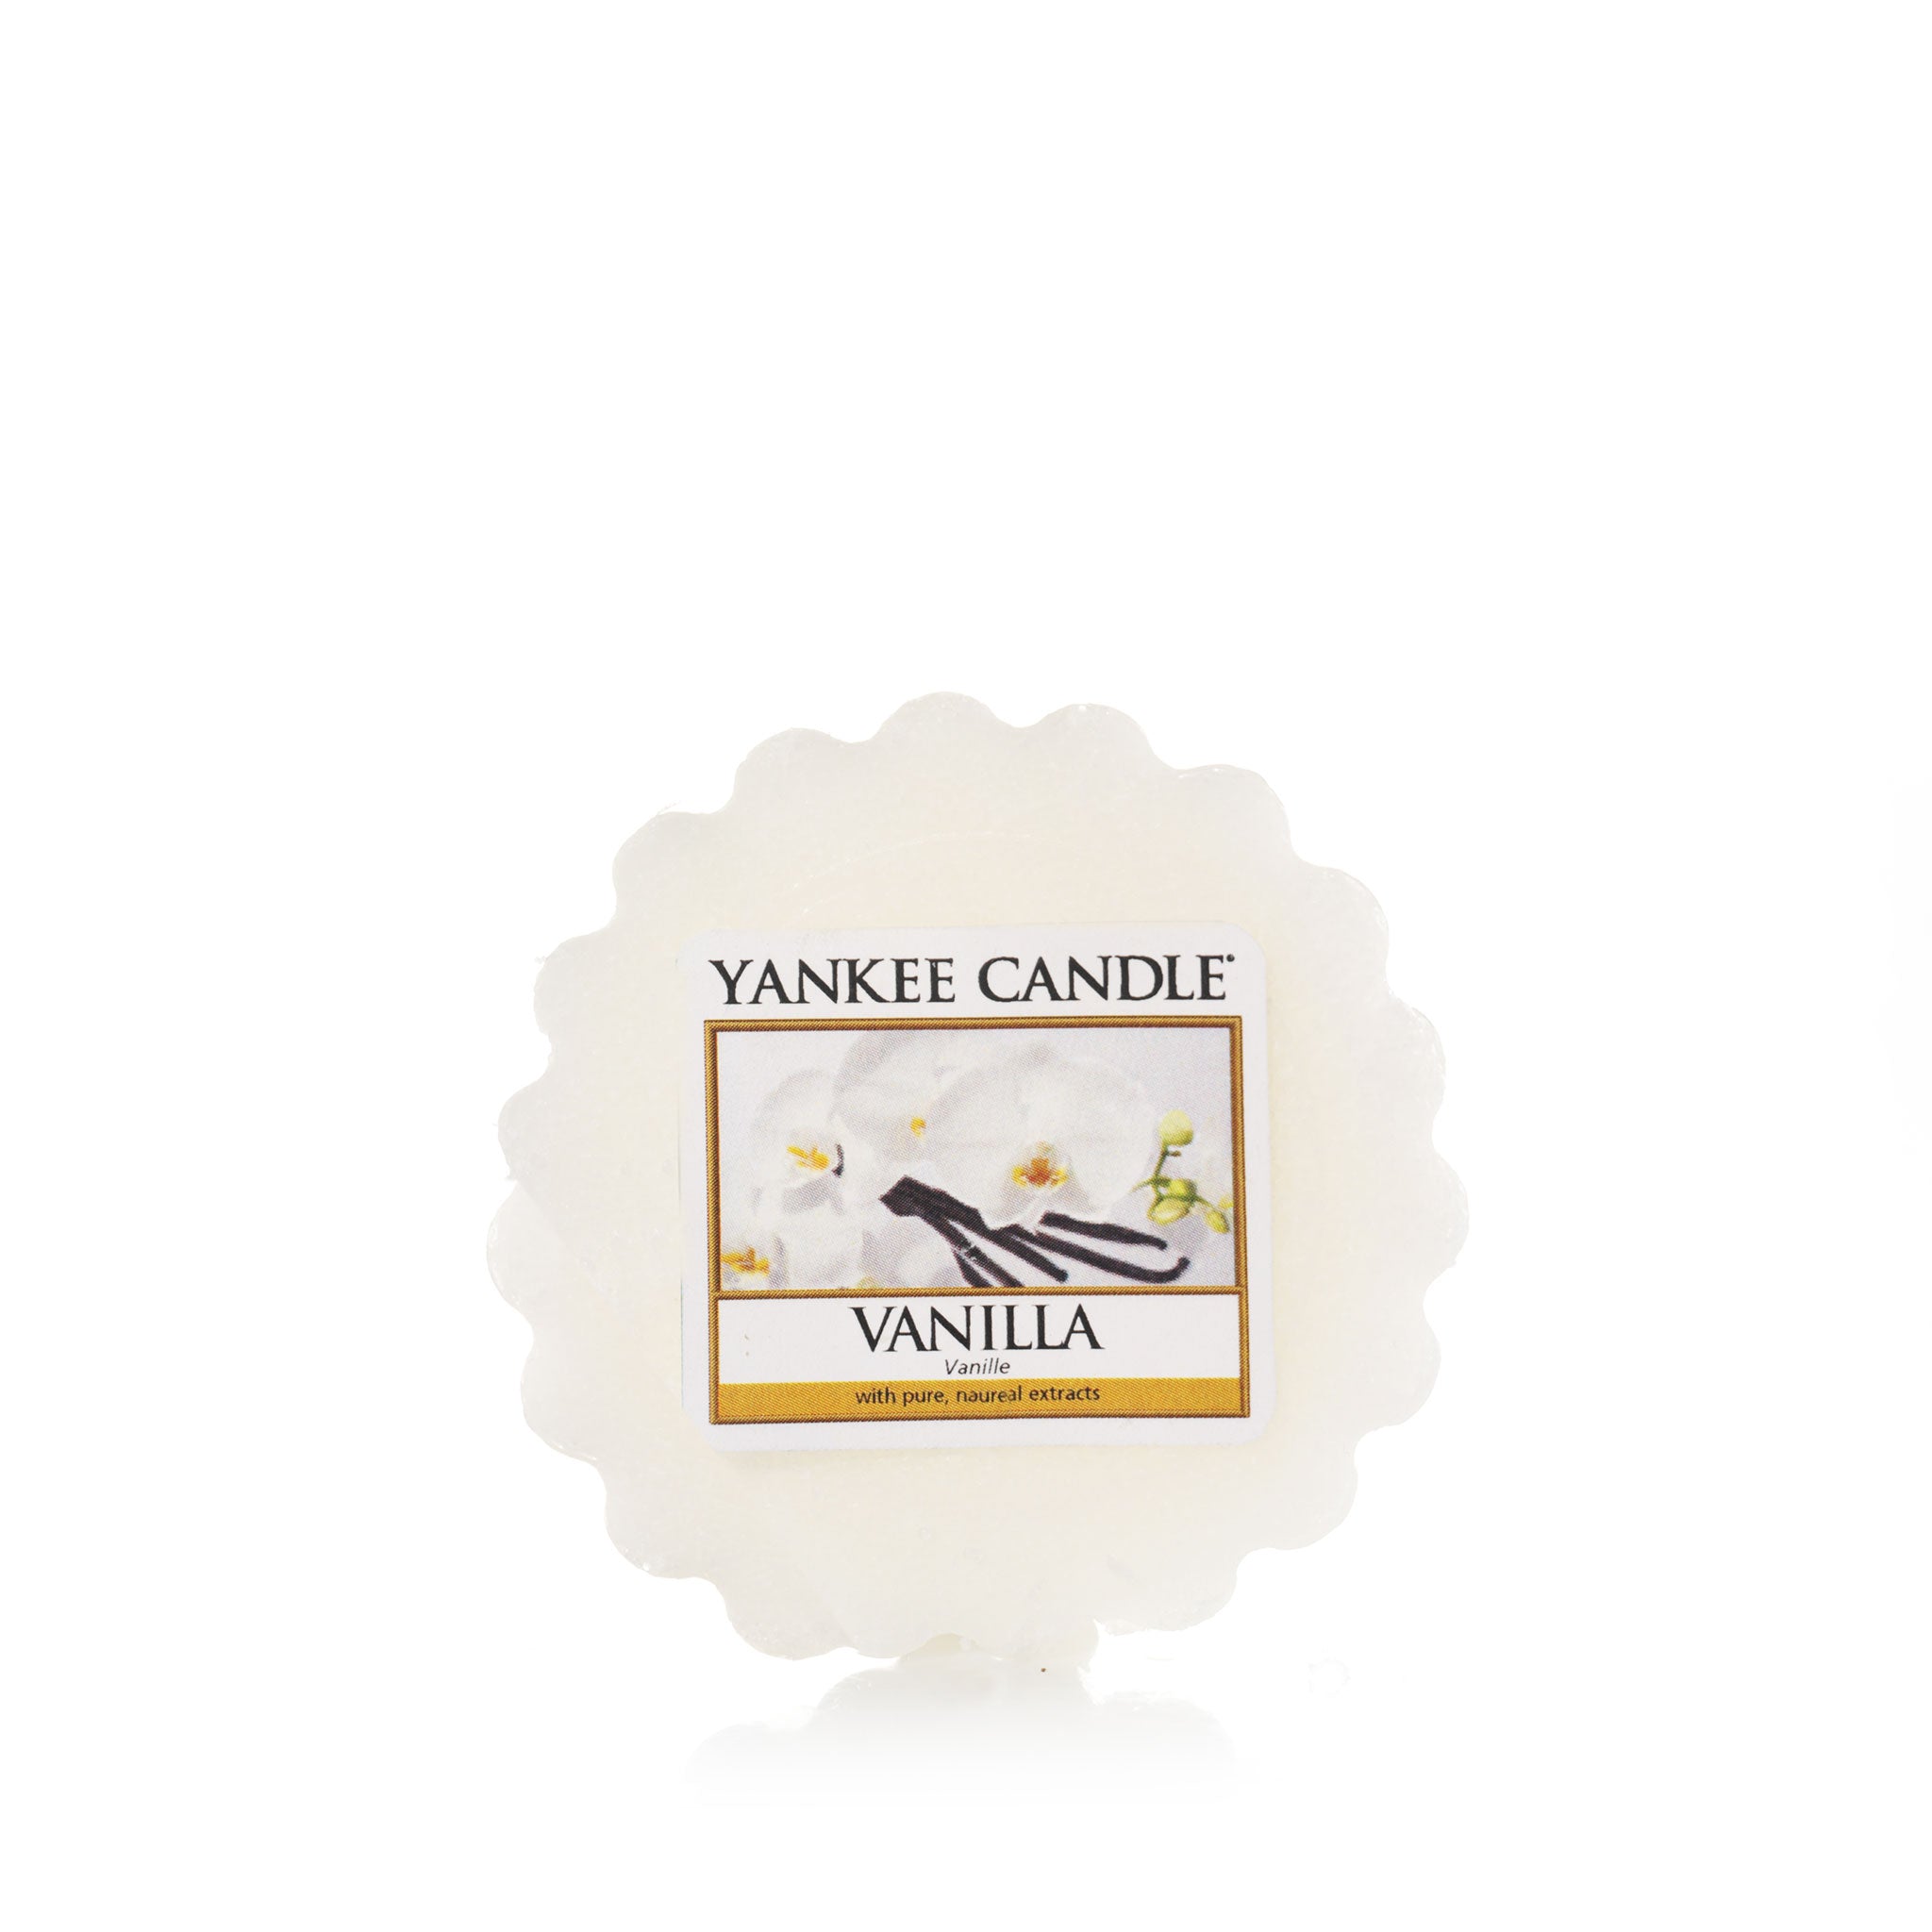 VANILLA -Yankee Candle- Tart